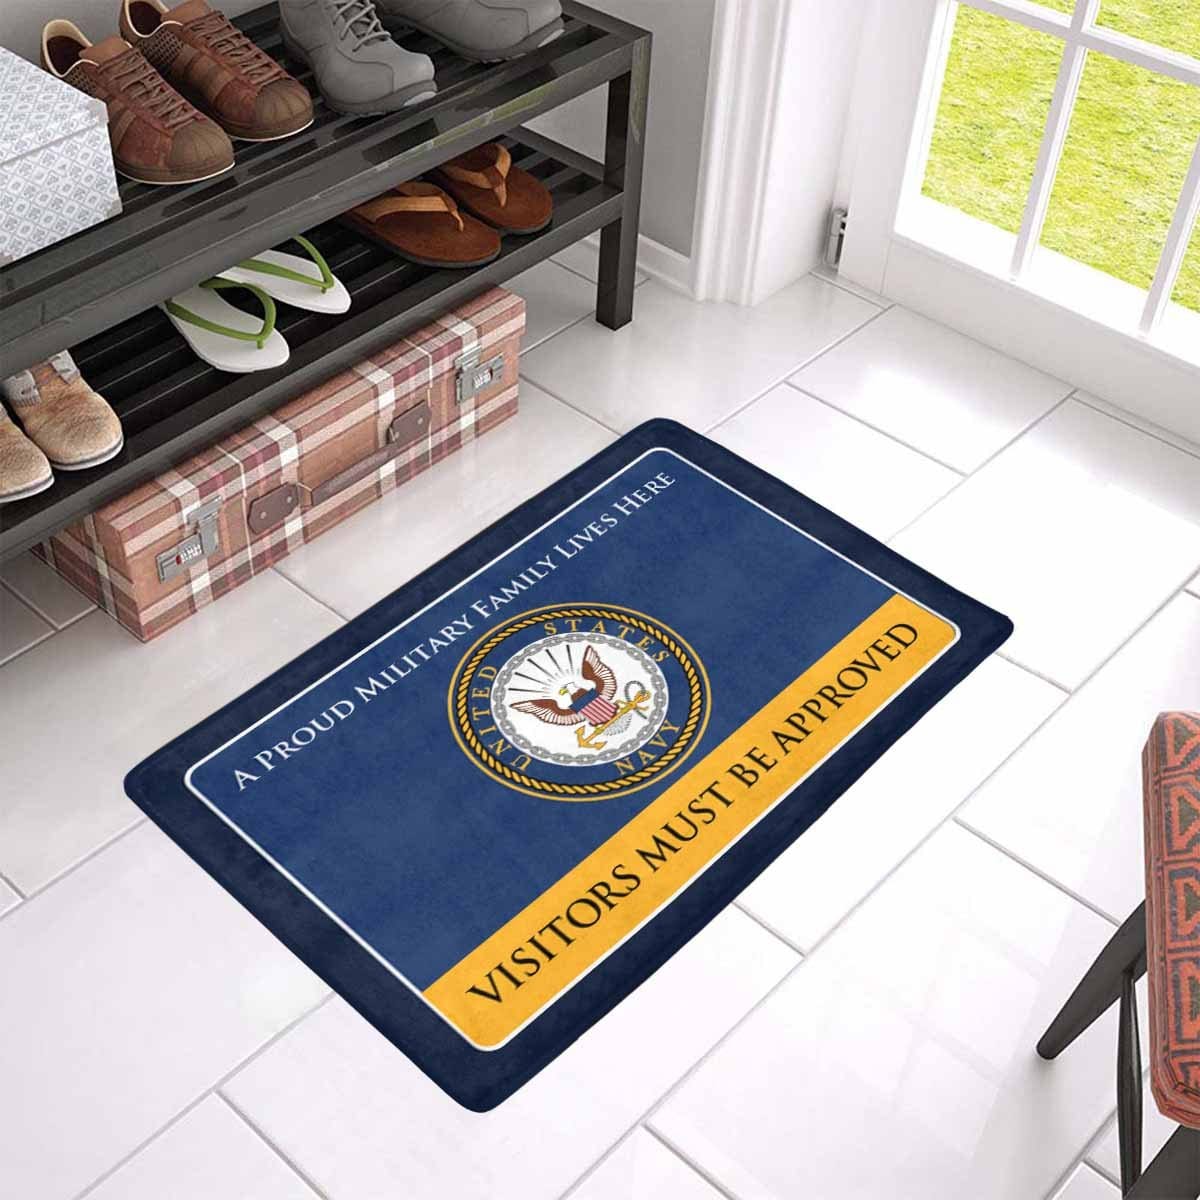 Proud Military Family Navy Doormat - Visitors must be approved-Doormat-Navy-Logo-Veterans Nation